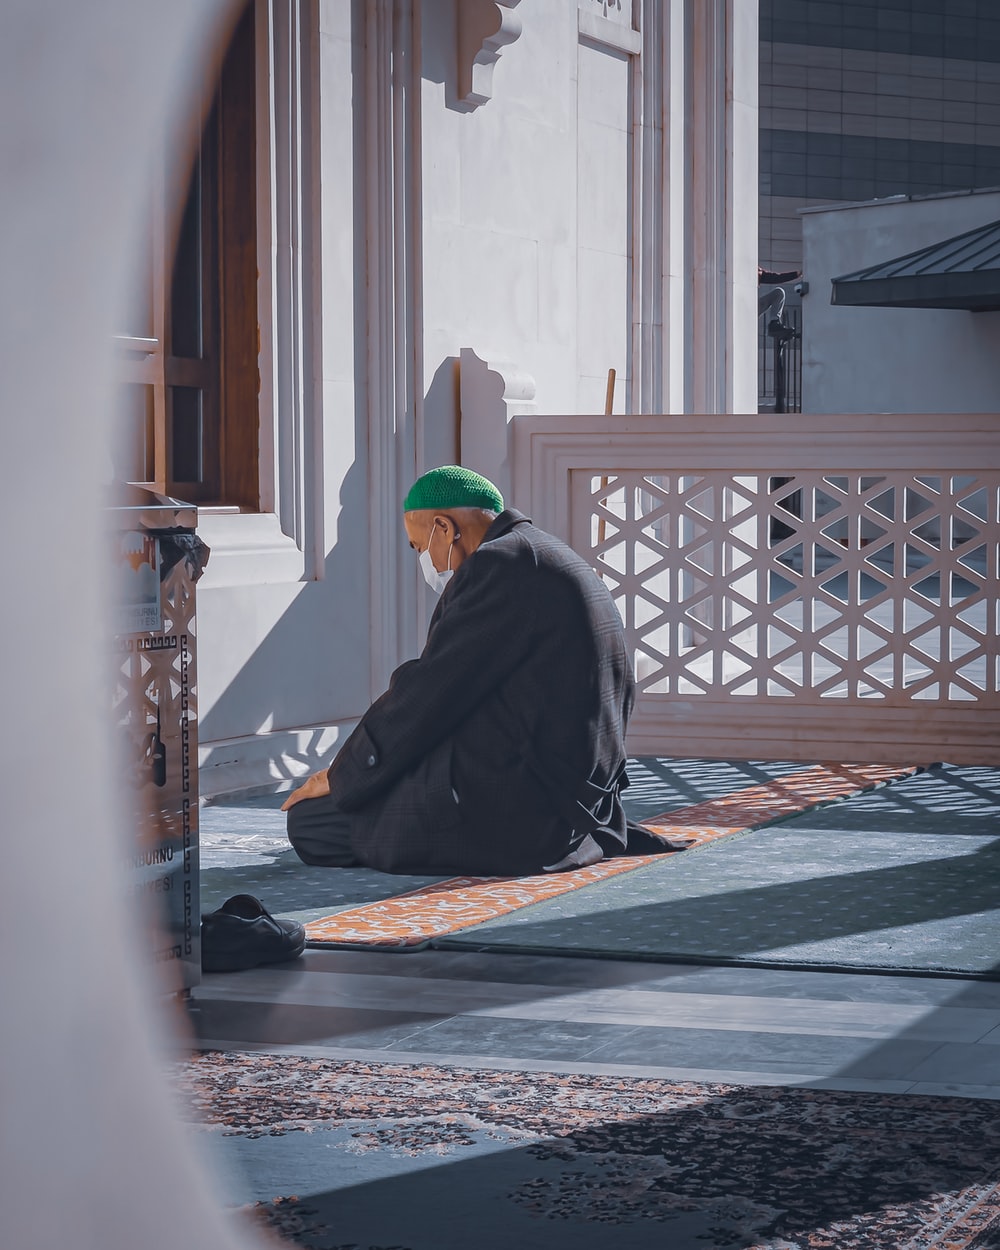 1K+ Islamic Prayer Picture. Download Free Image